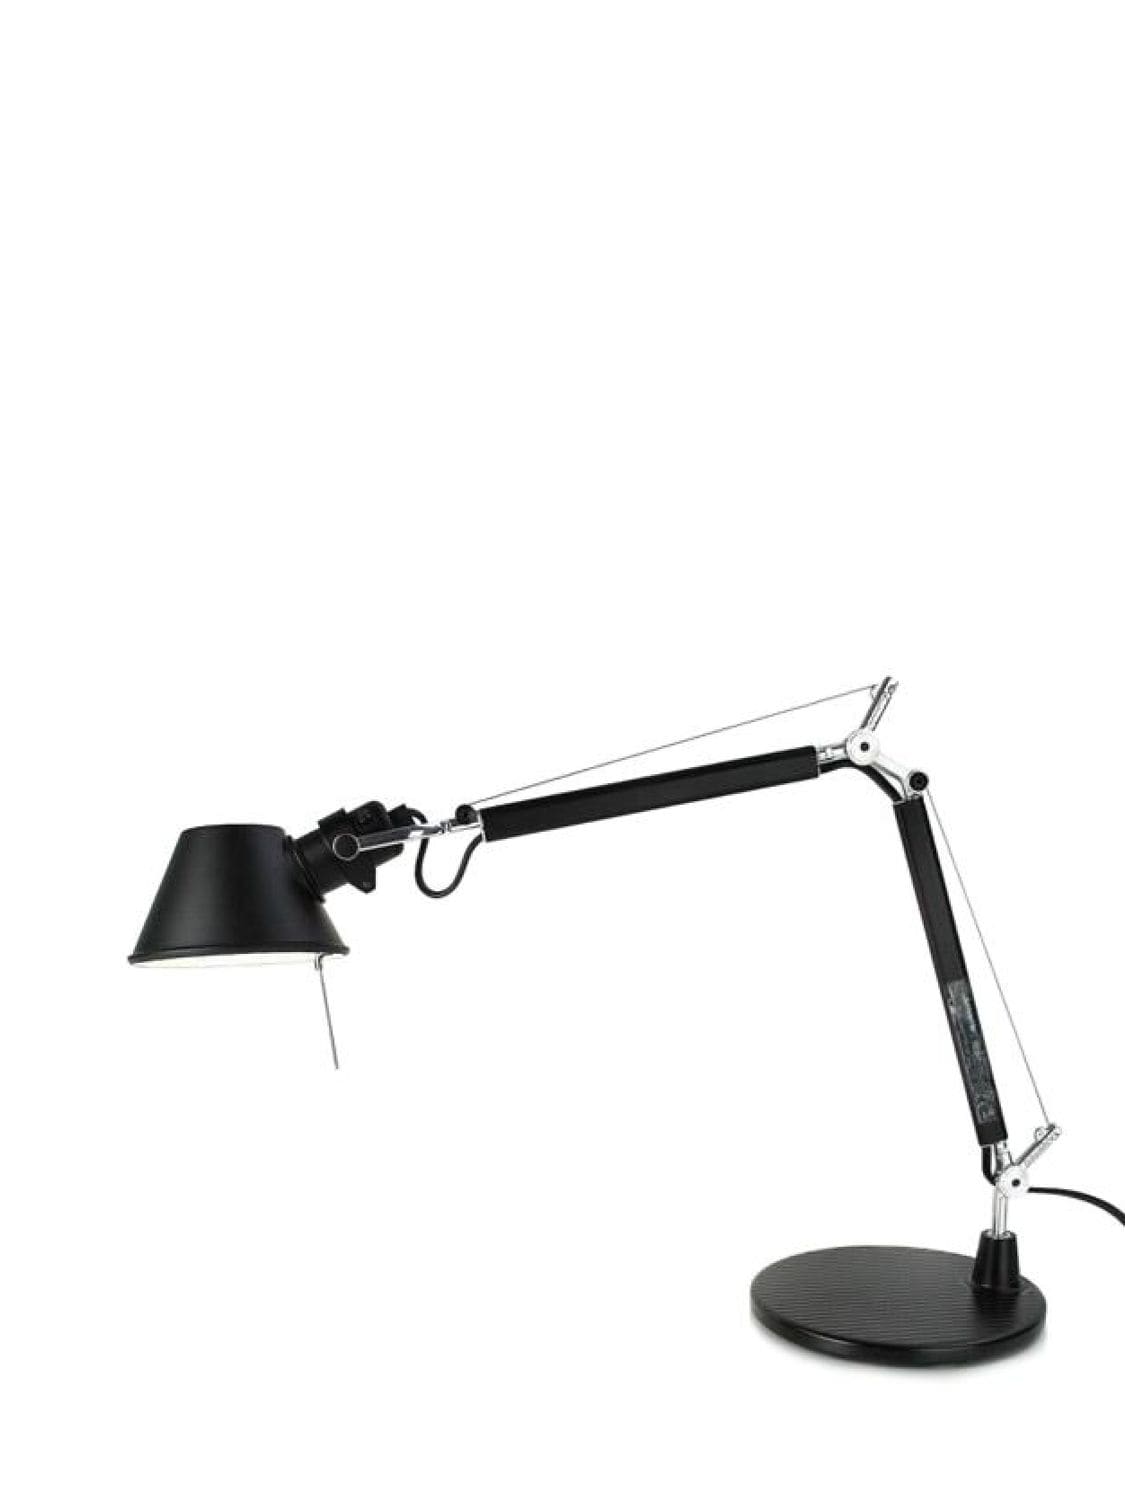 Artemide Tolomeo Table Lamp In Black